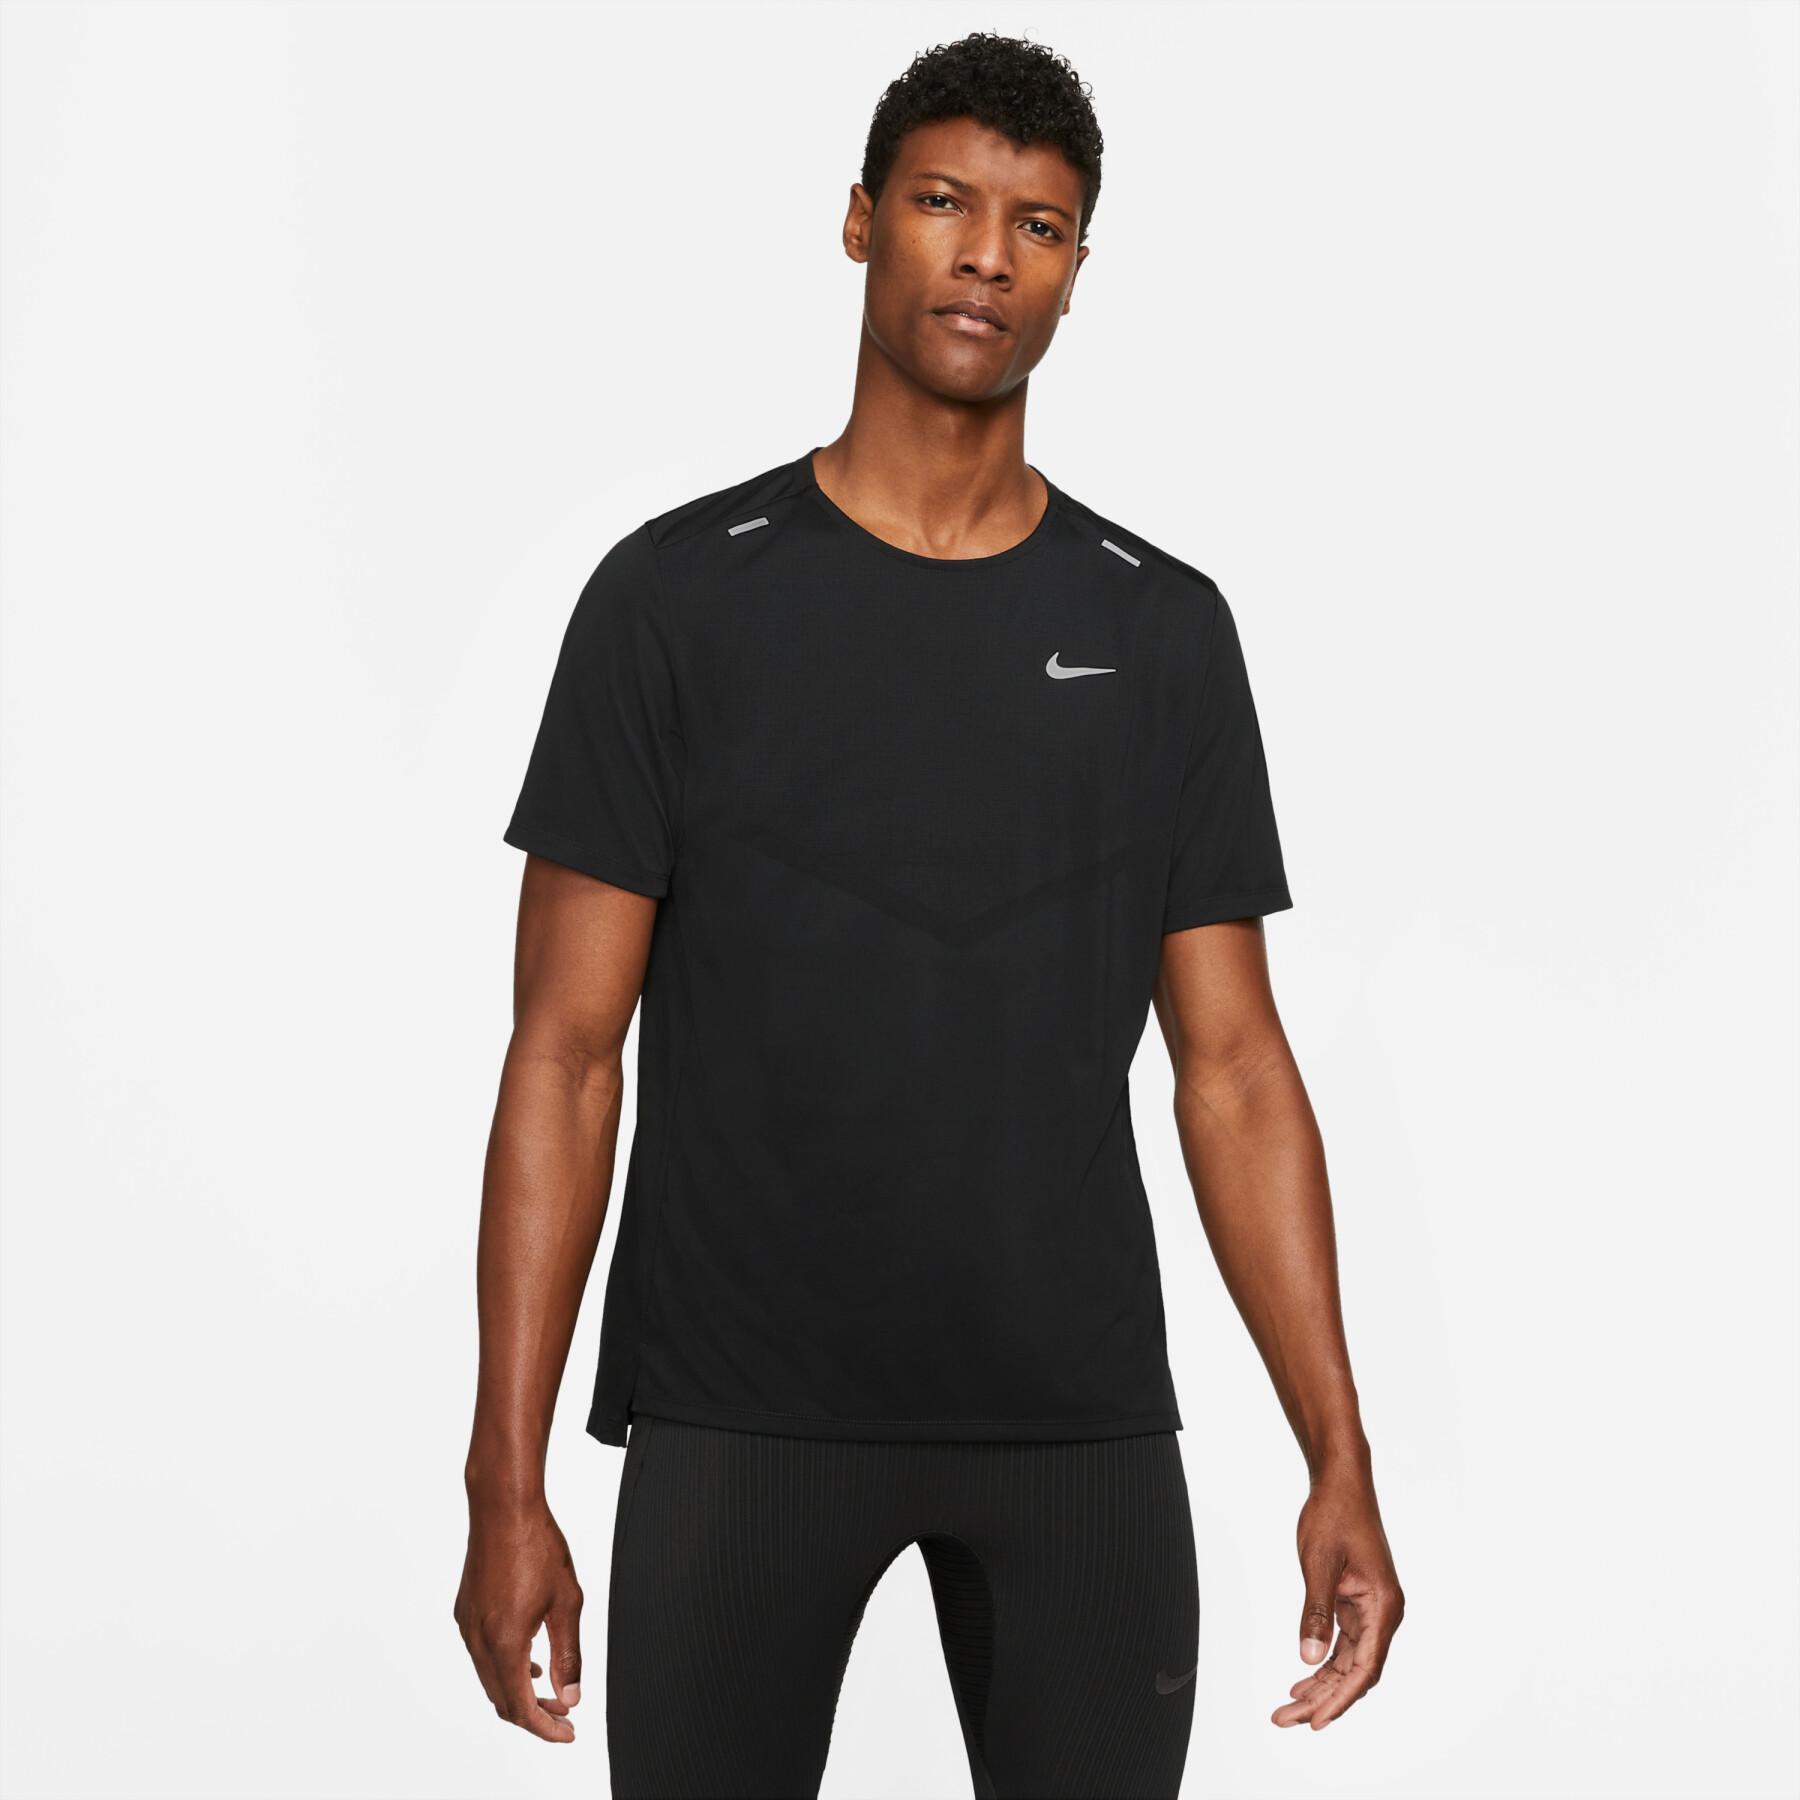 Maglietta Nike Dri-FIT Rise 365